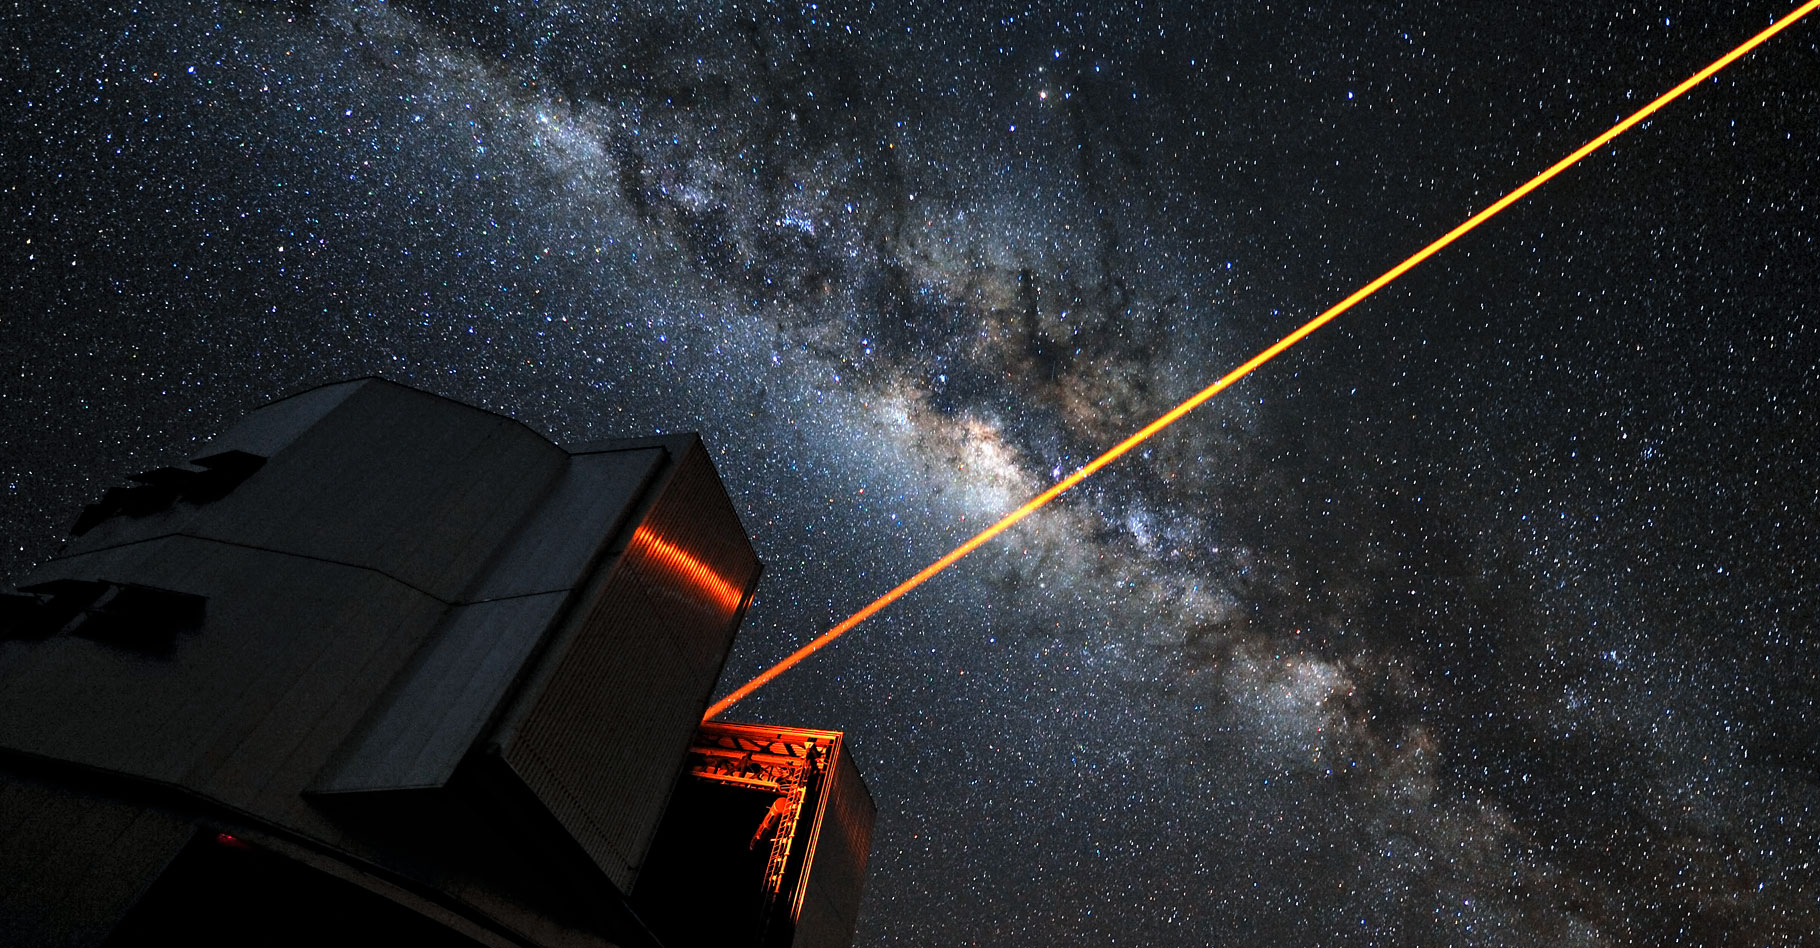 Le laser de guidage stellaire du VLT (Very large telescope). © ESO, G. Hüdepohl, CC by 4.0 